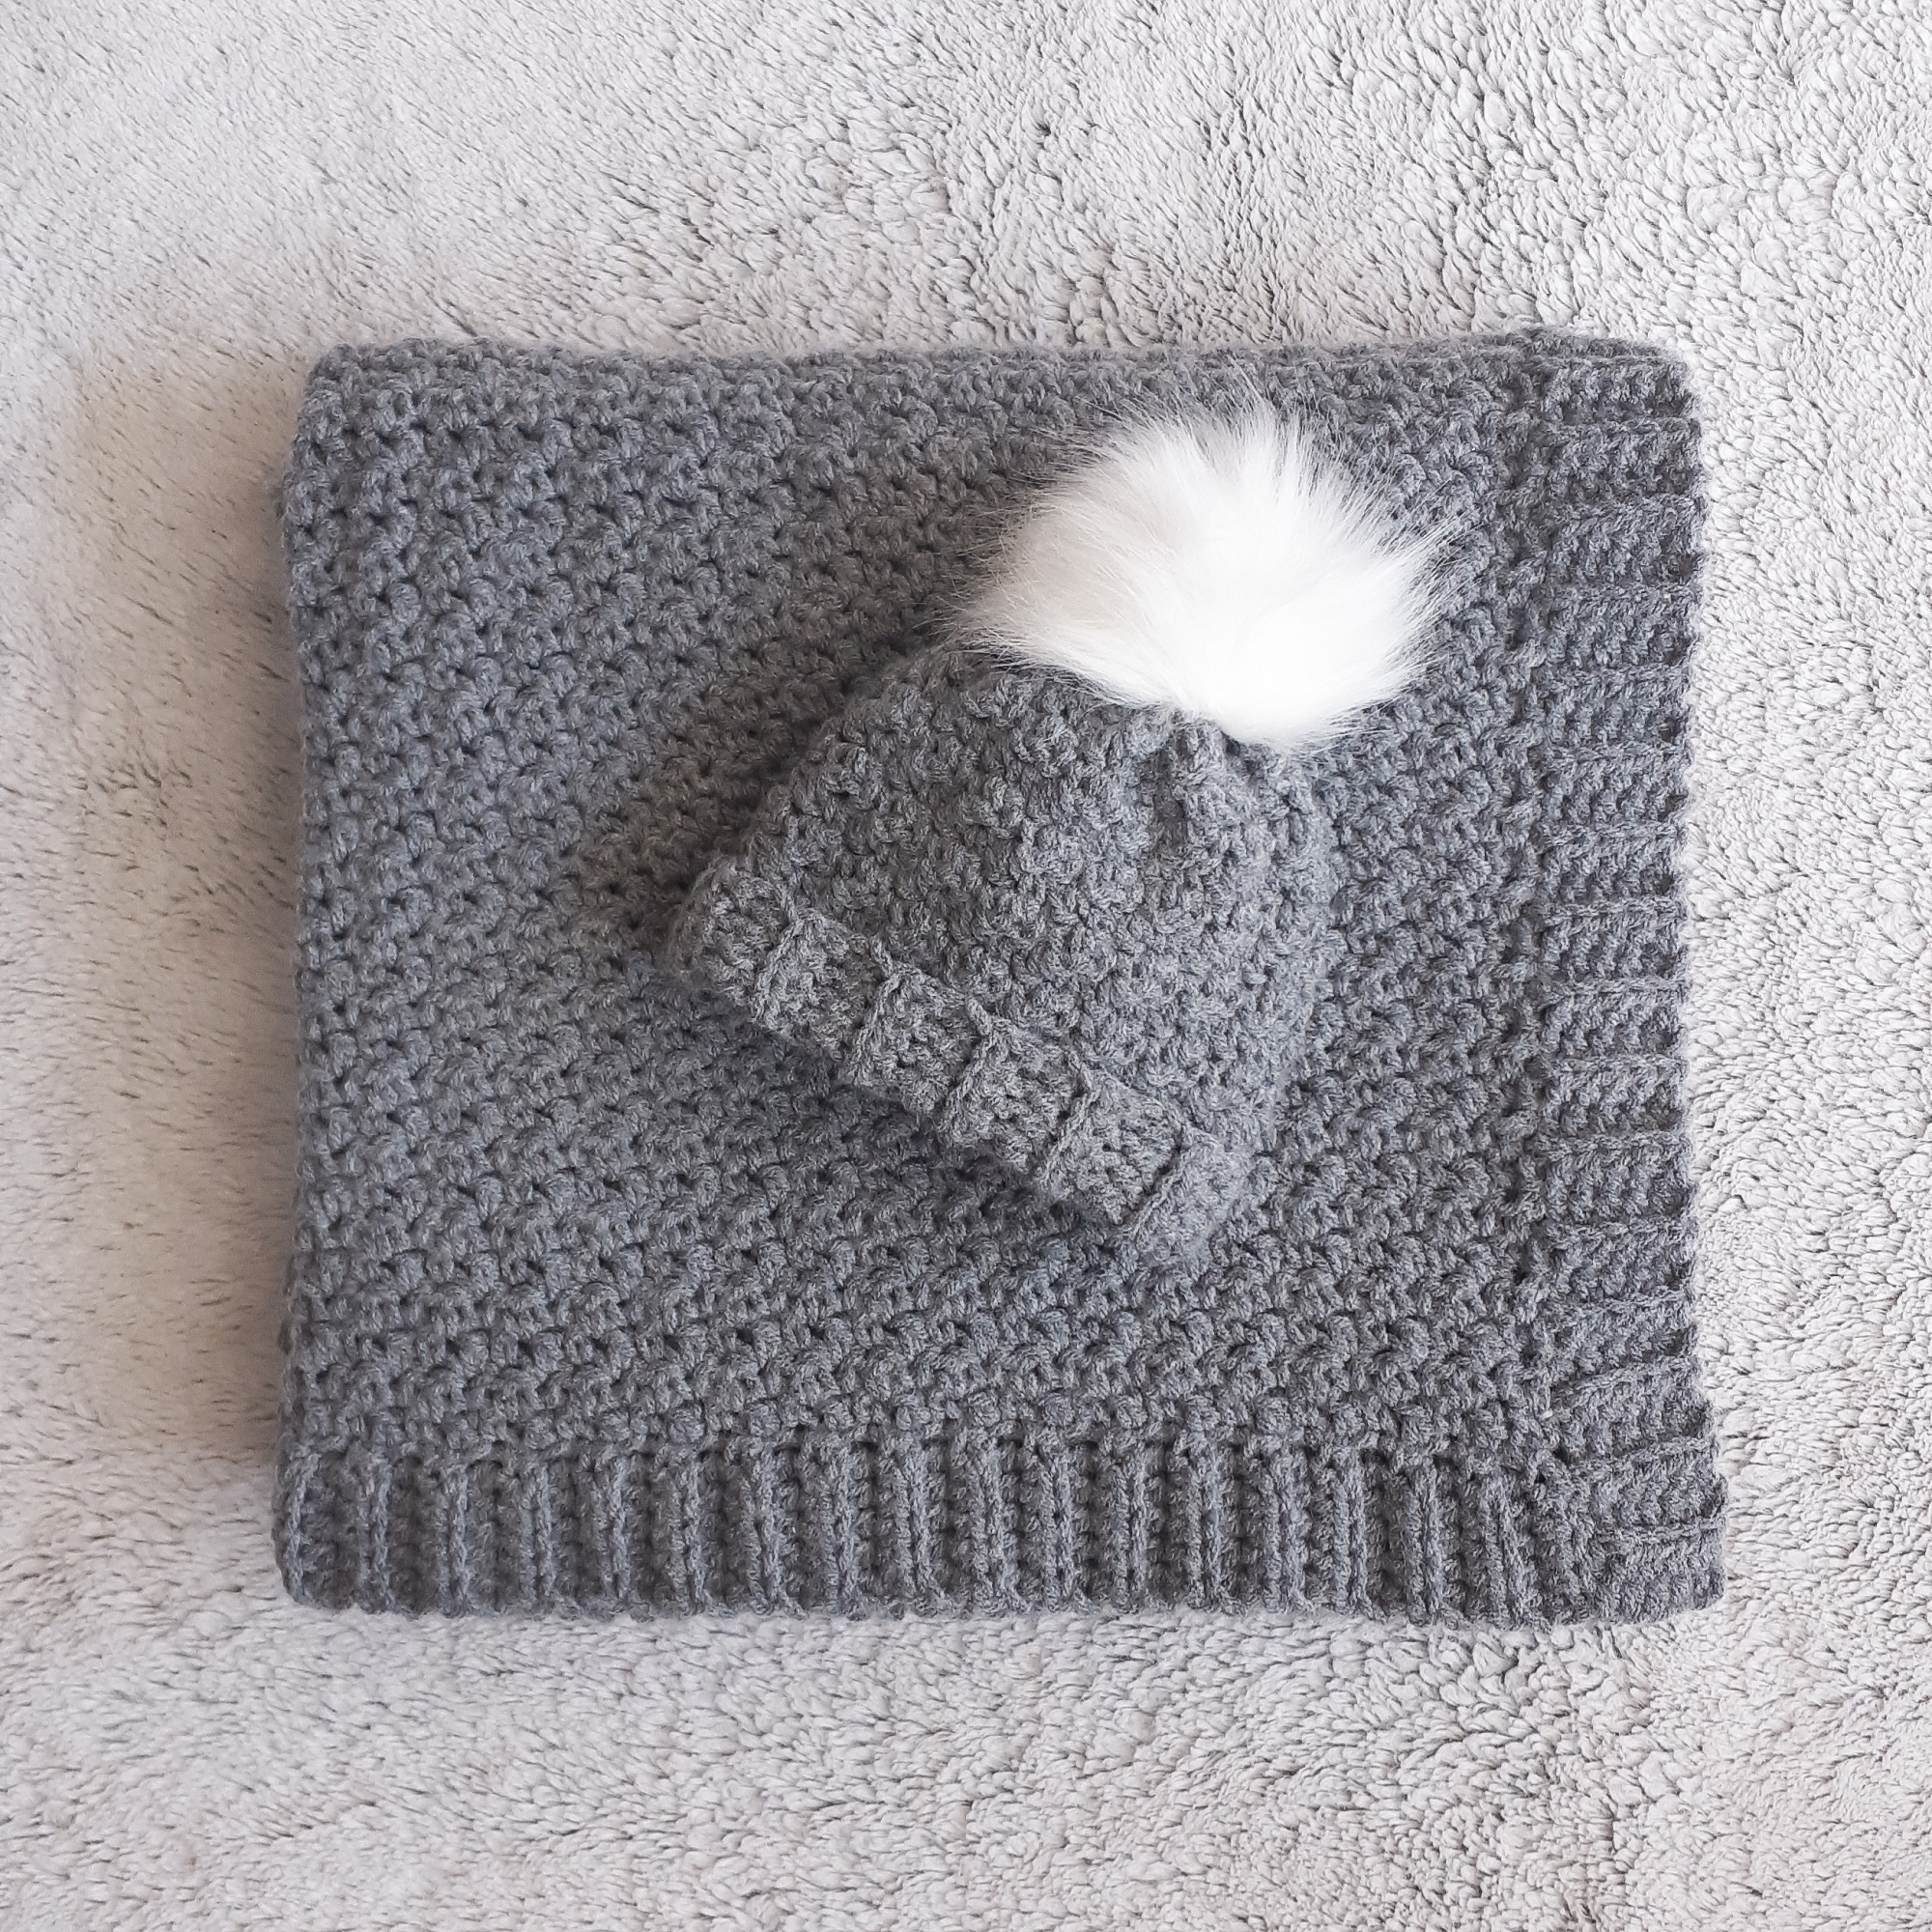 Modern Gender Neutral Crochet Baby Blanket - Free Pattern!